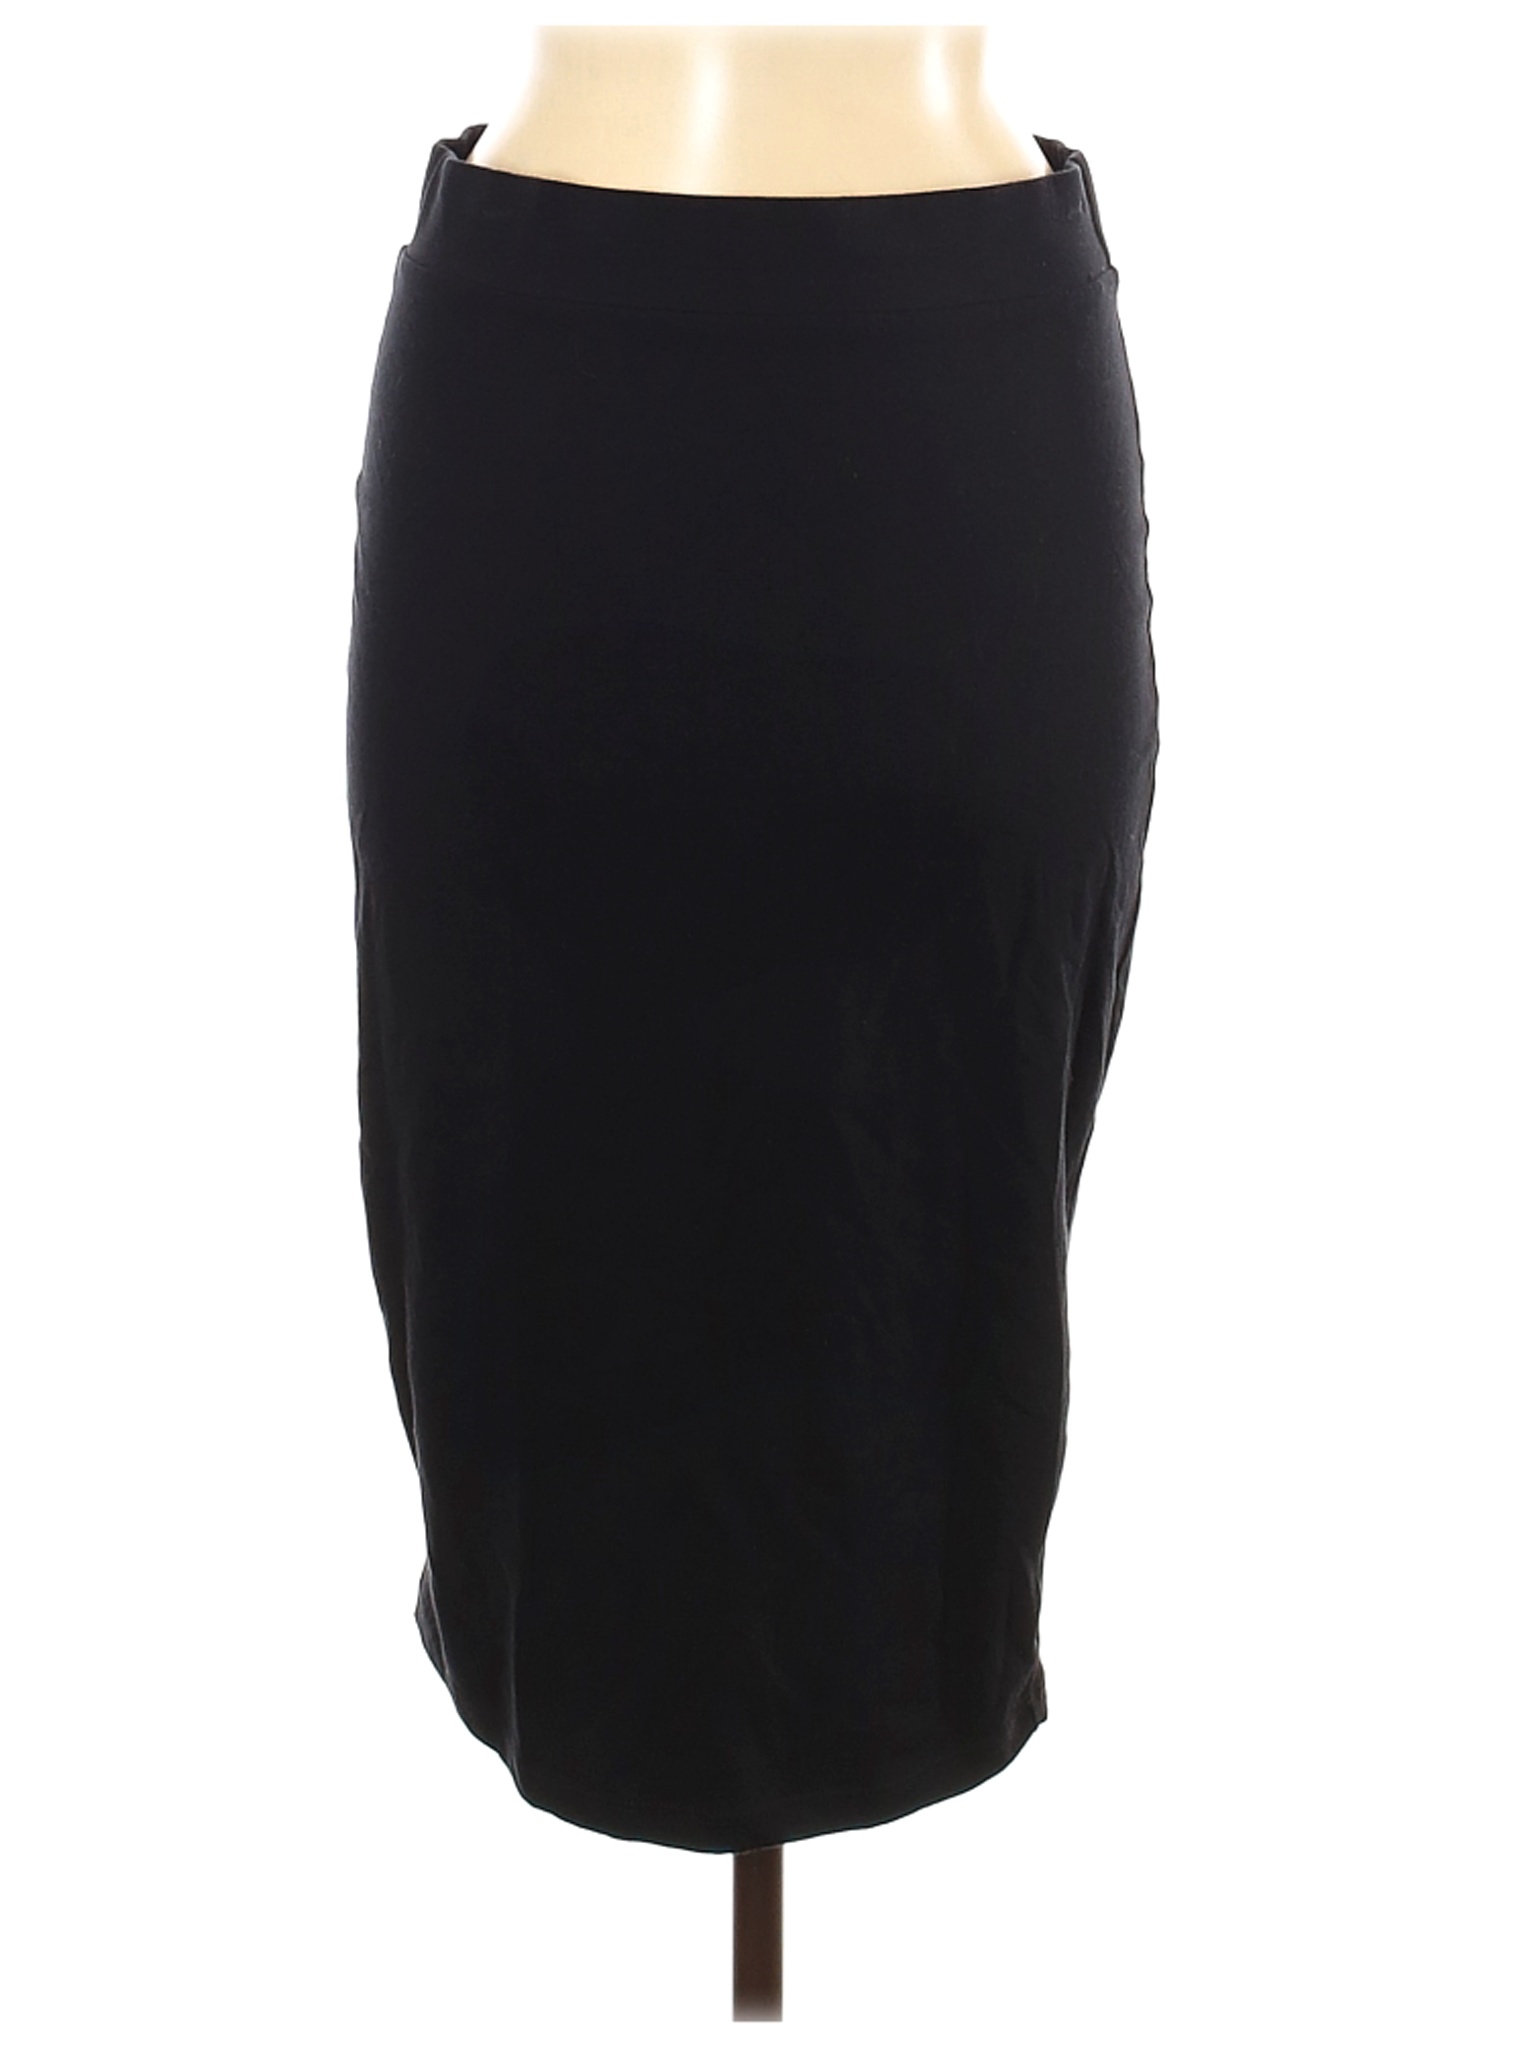 Zenana Premium Women Black Casual Skirt L | eBay